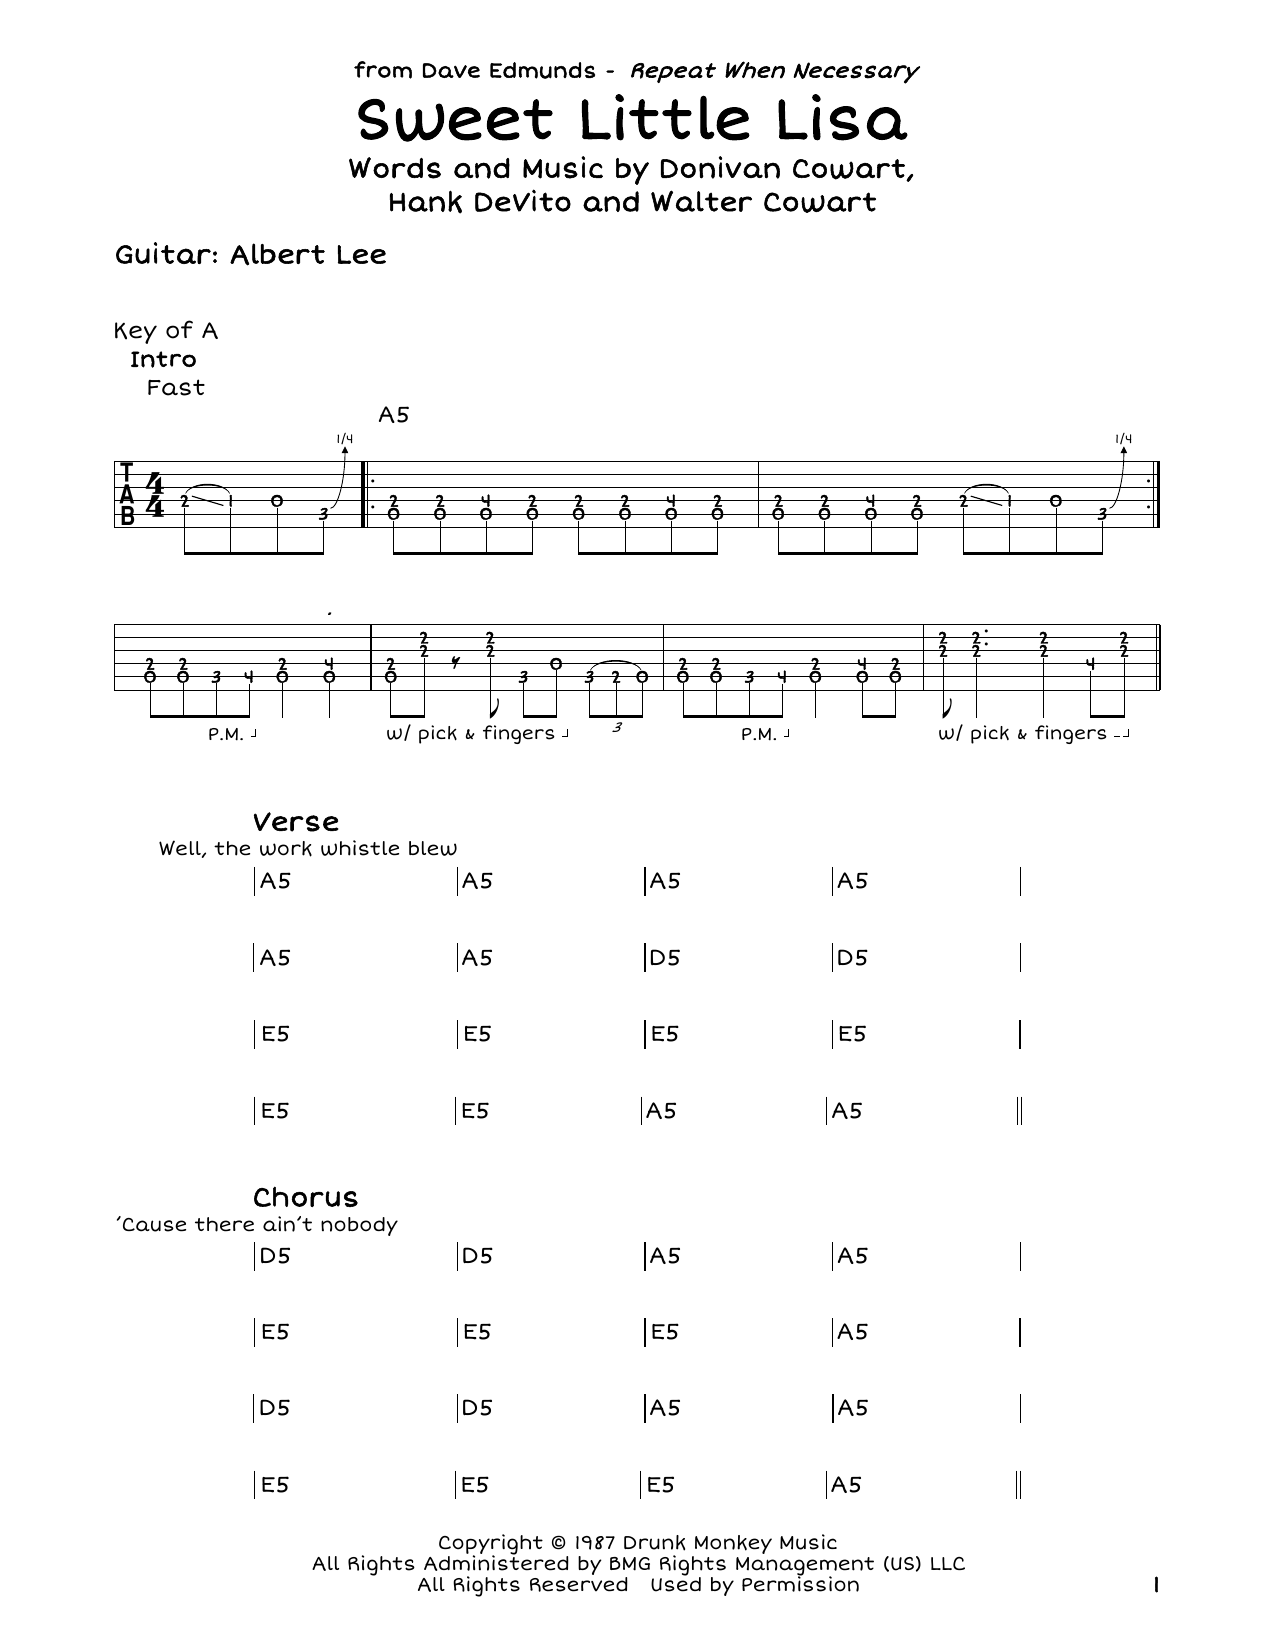 Dave Edmunds Sweet Little Lisa Sheet Music Notes & Chords for Guitar Tab - Download or Print PDF